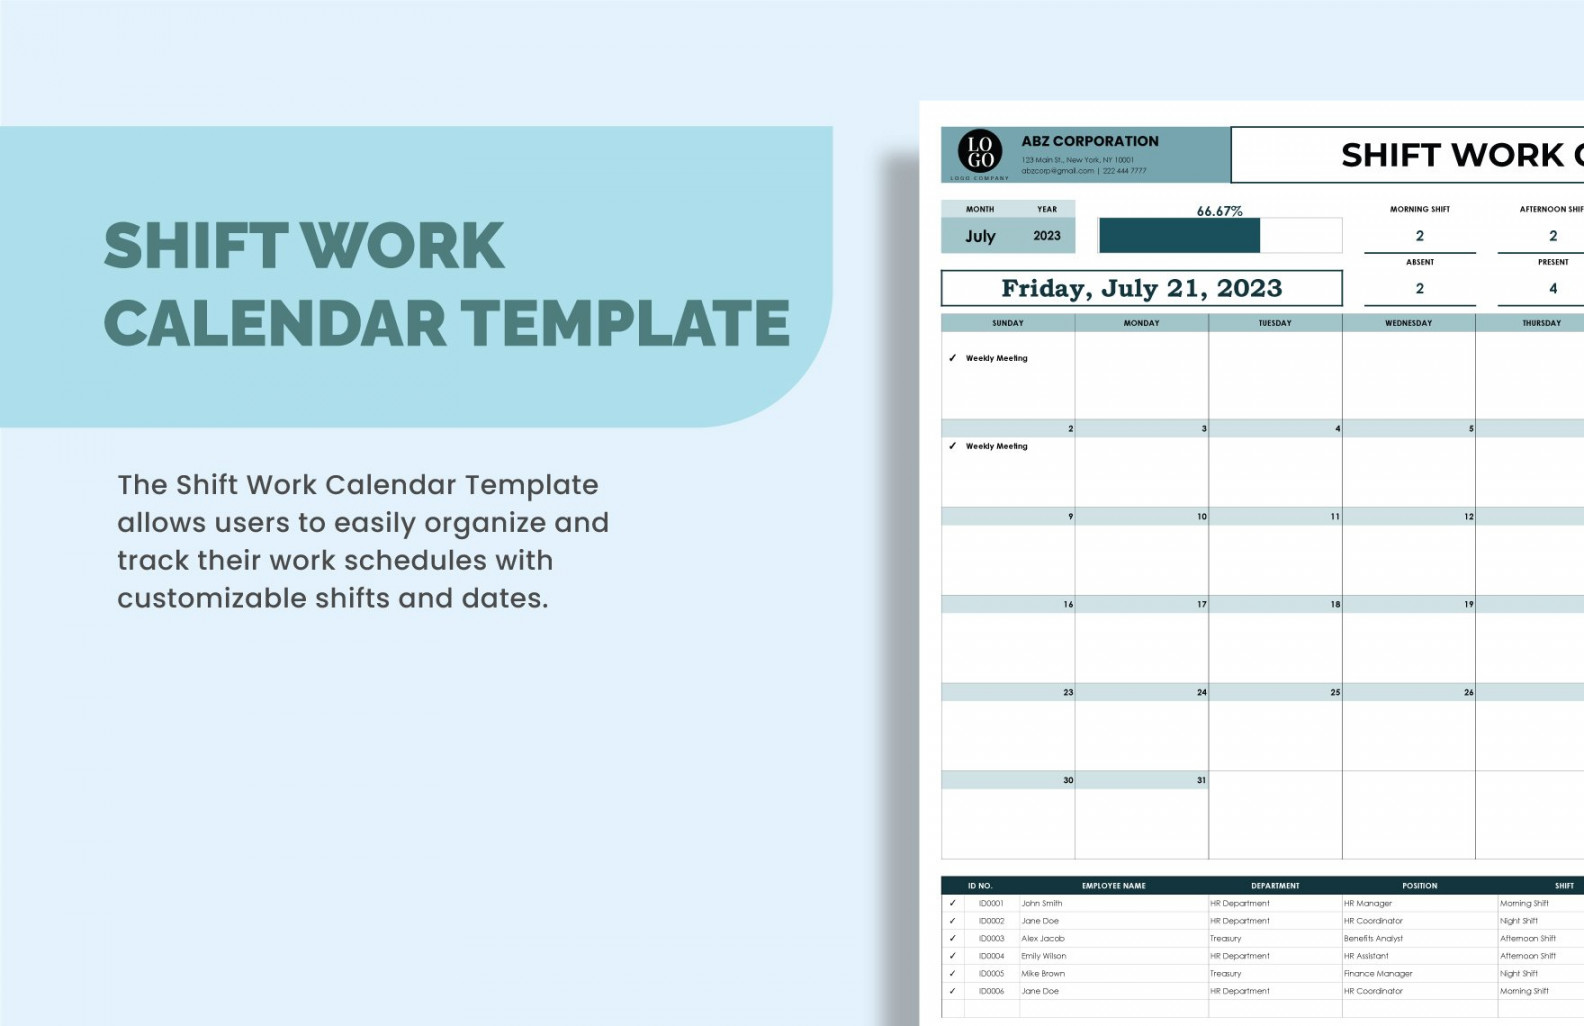 Shift Work Calendar Template - Download in Excel, Google Sheets